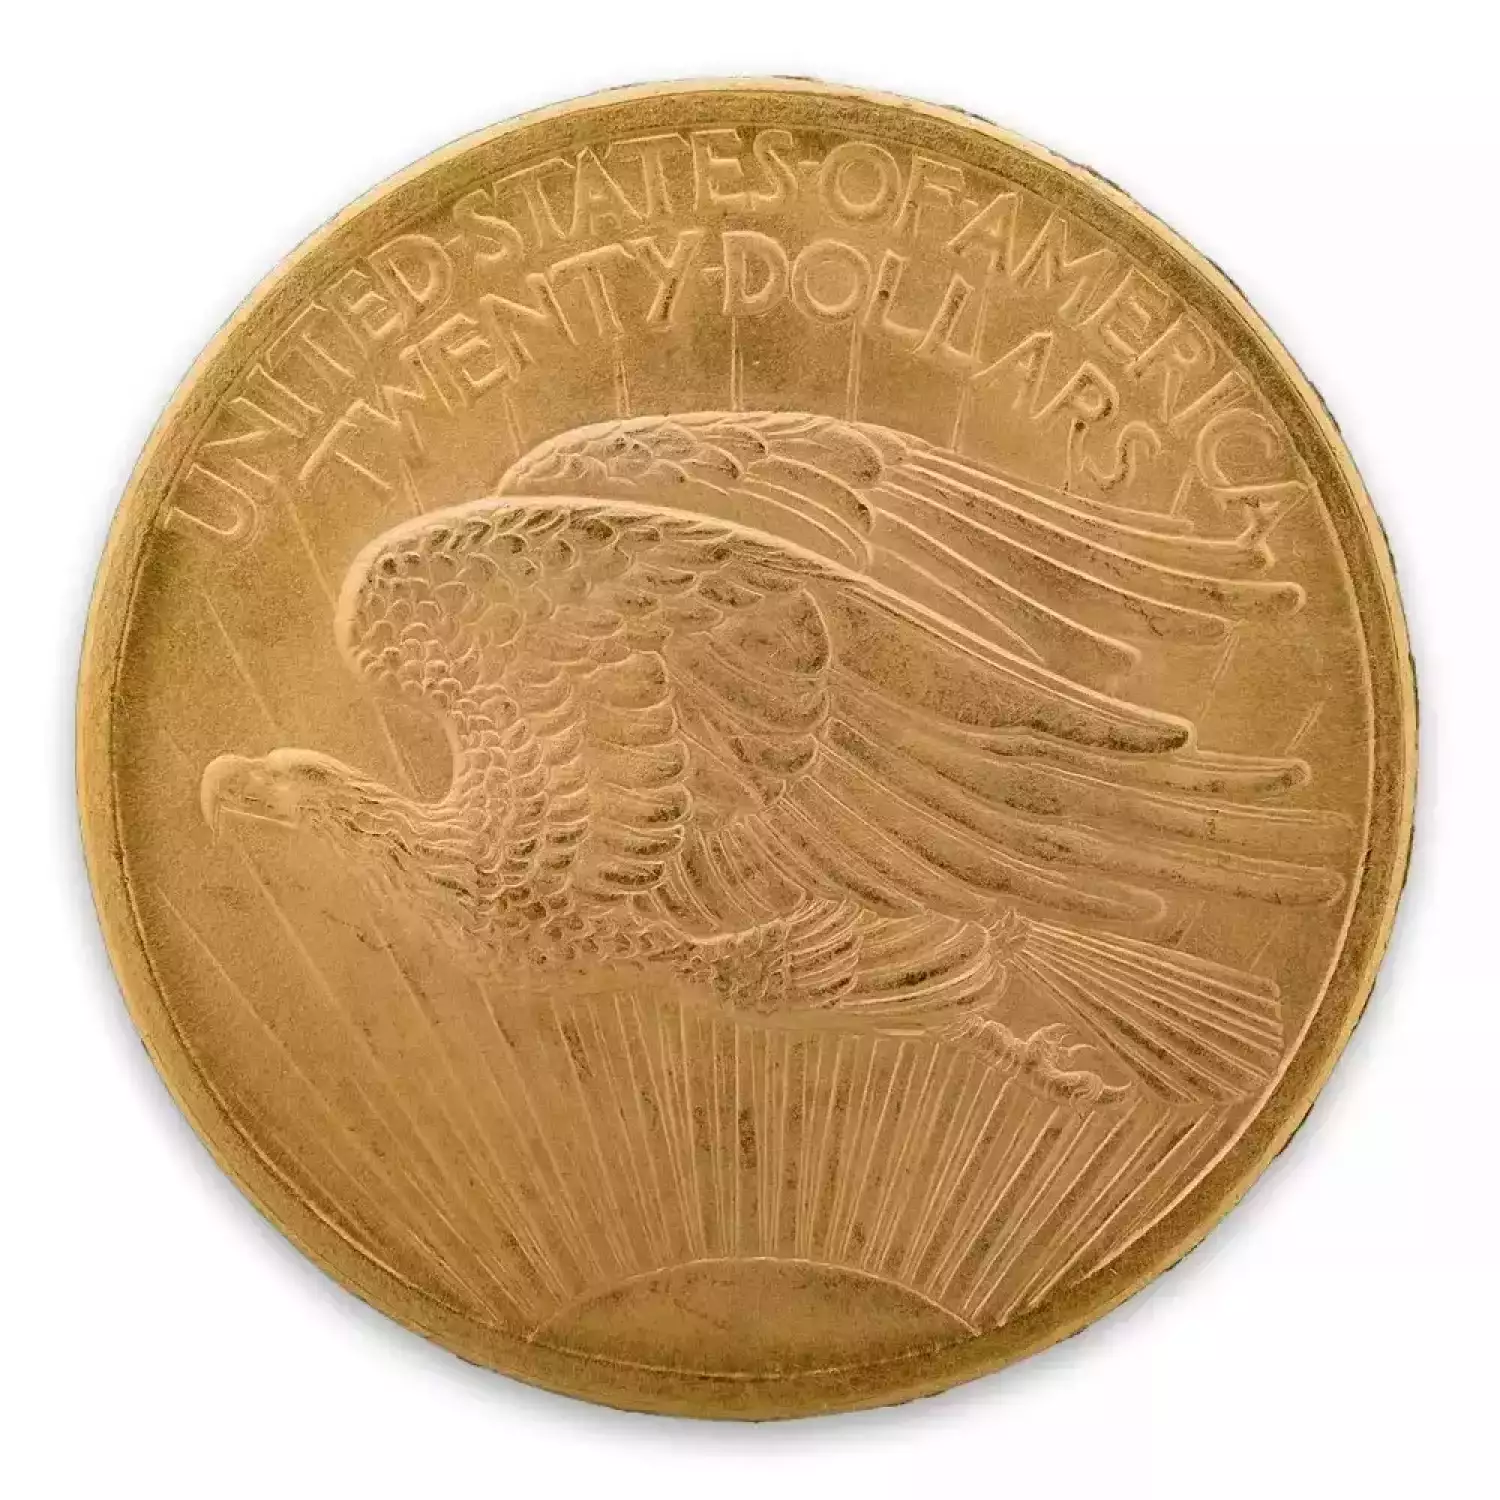 St. Gaudens $20 (1907 – 1933) - NGC - MS61